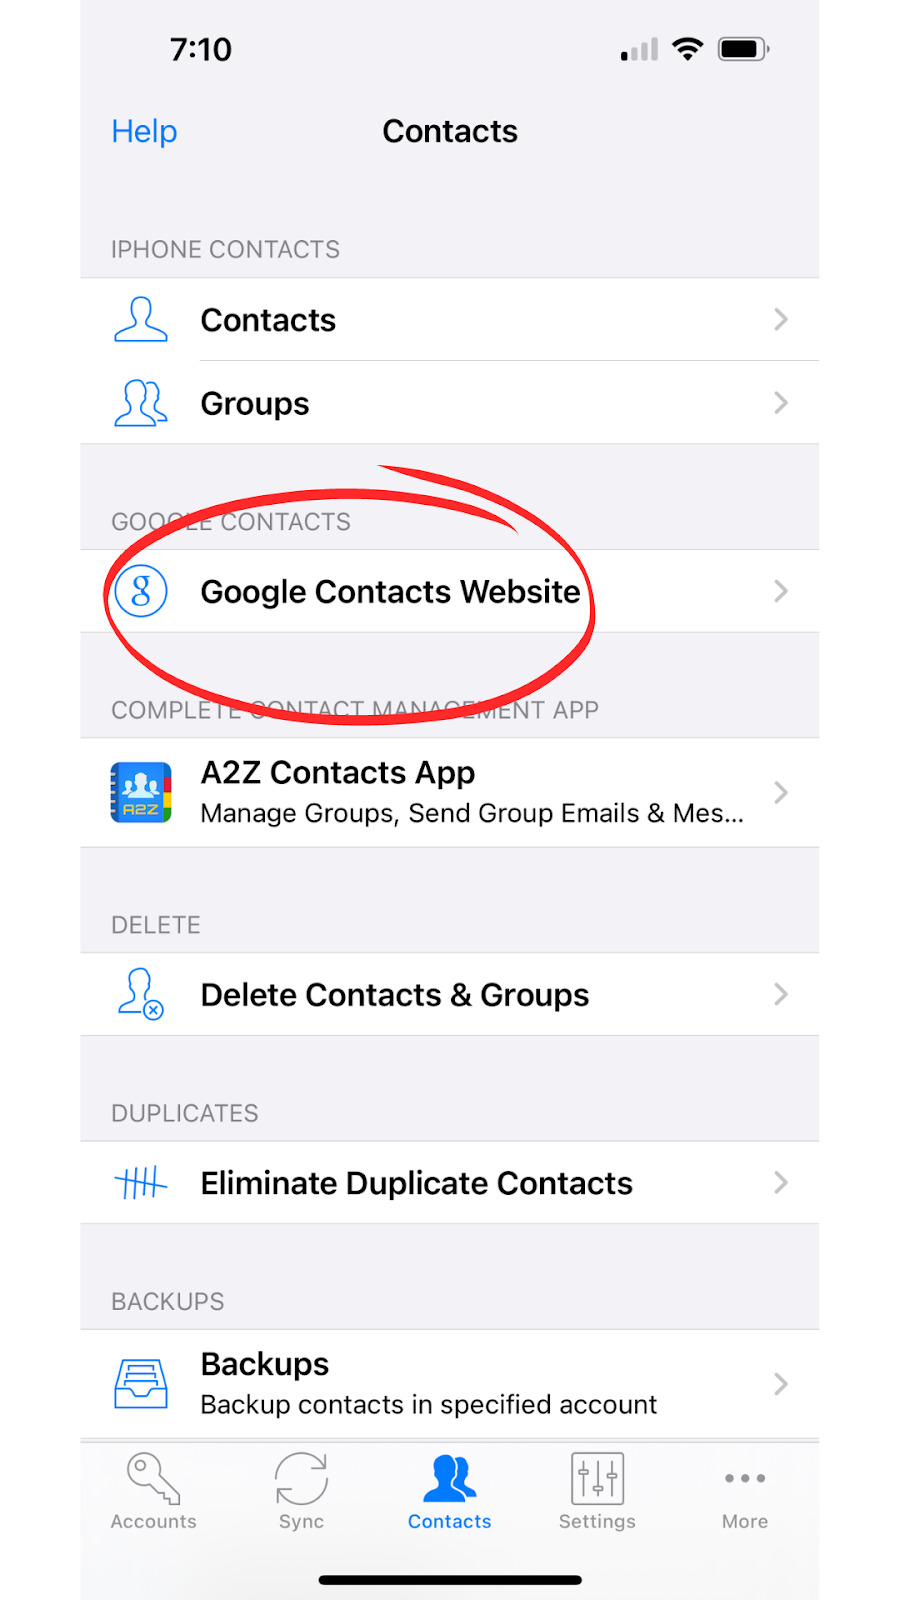 Google Contacts Website